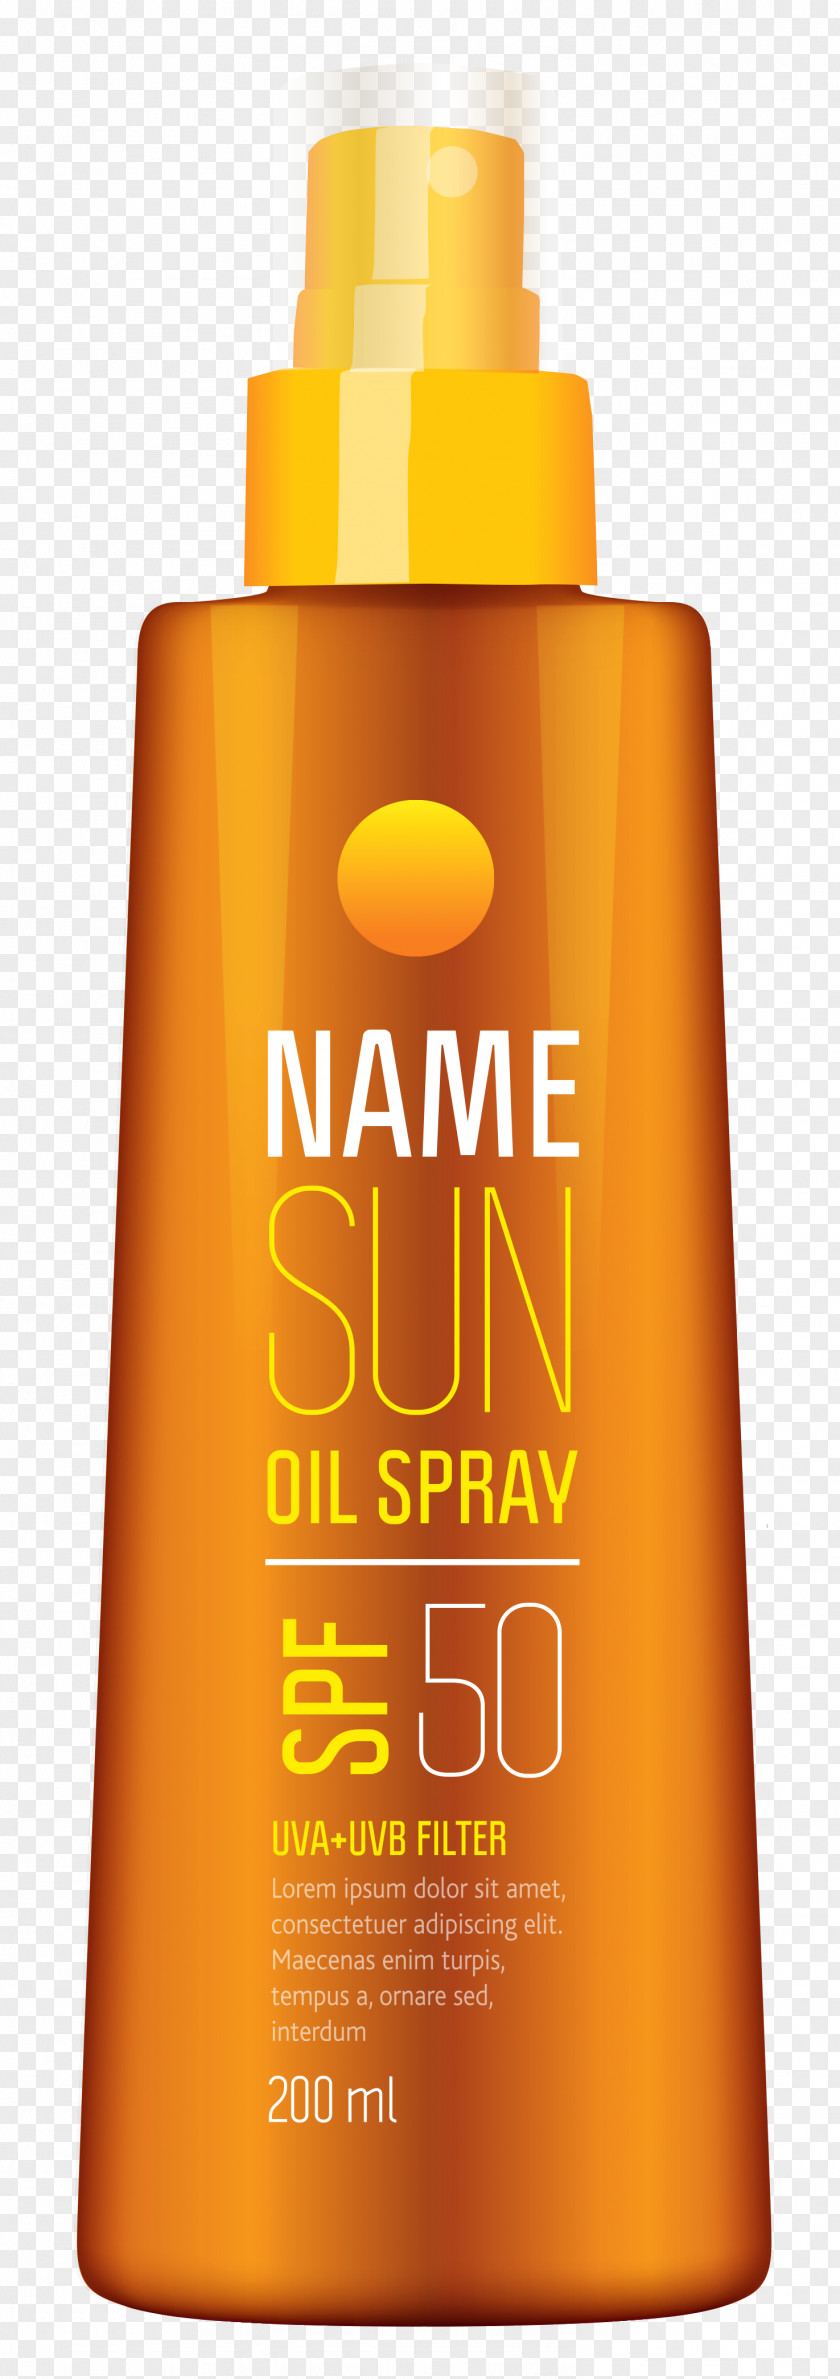 Sun Oil Spray Clipart Picture Sunscreen Lotion Lipstick Clip Art PNG